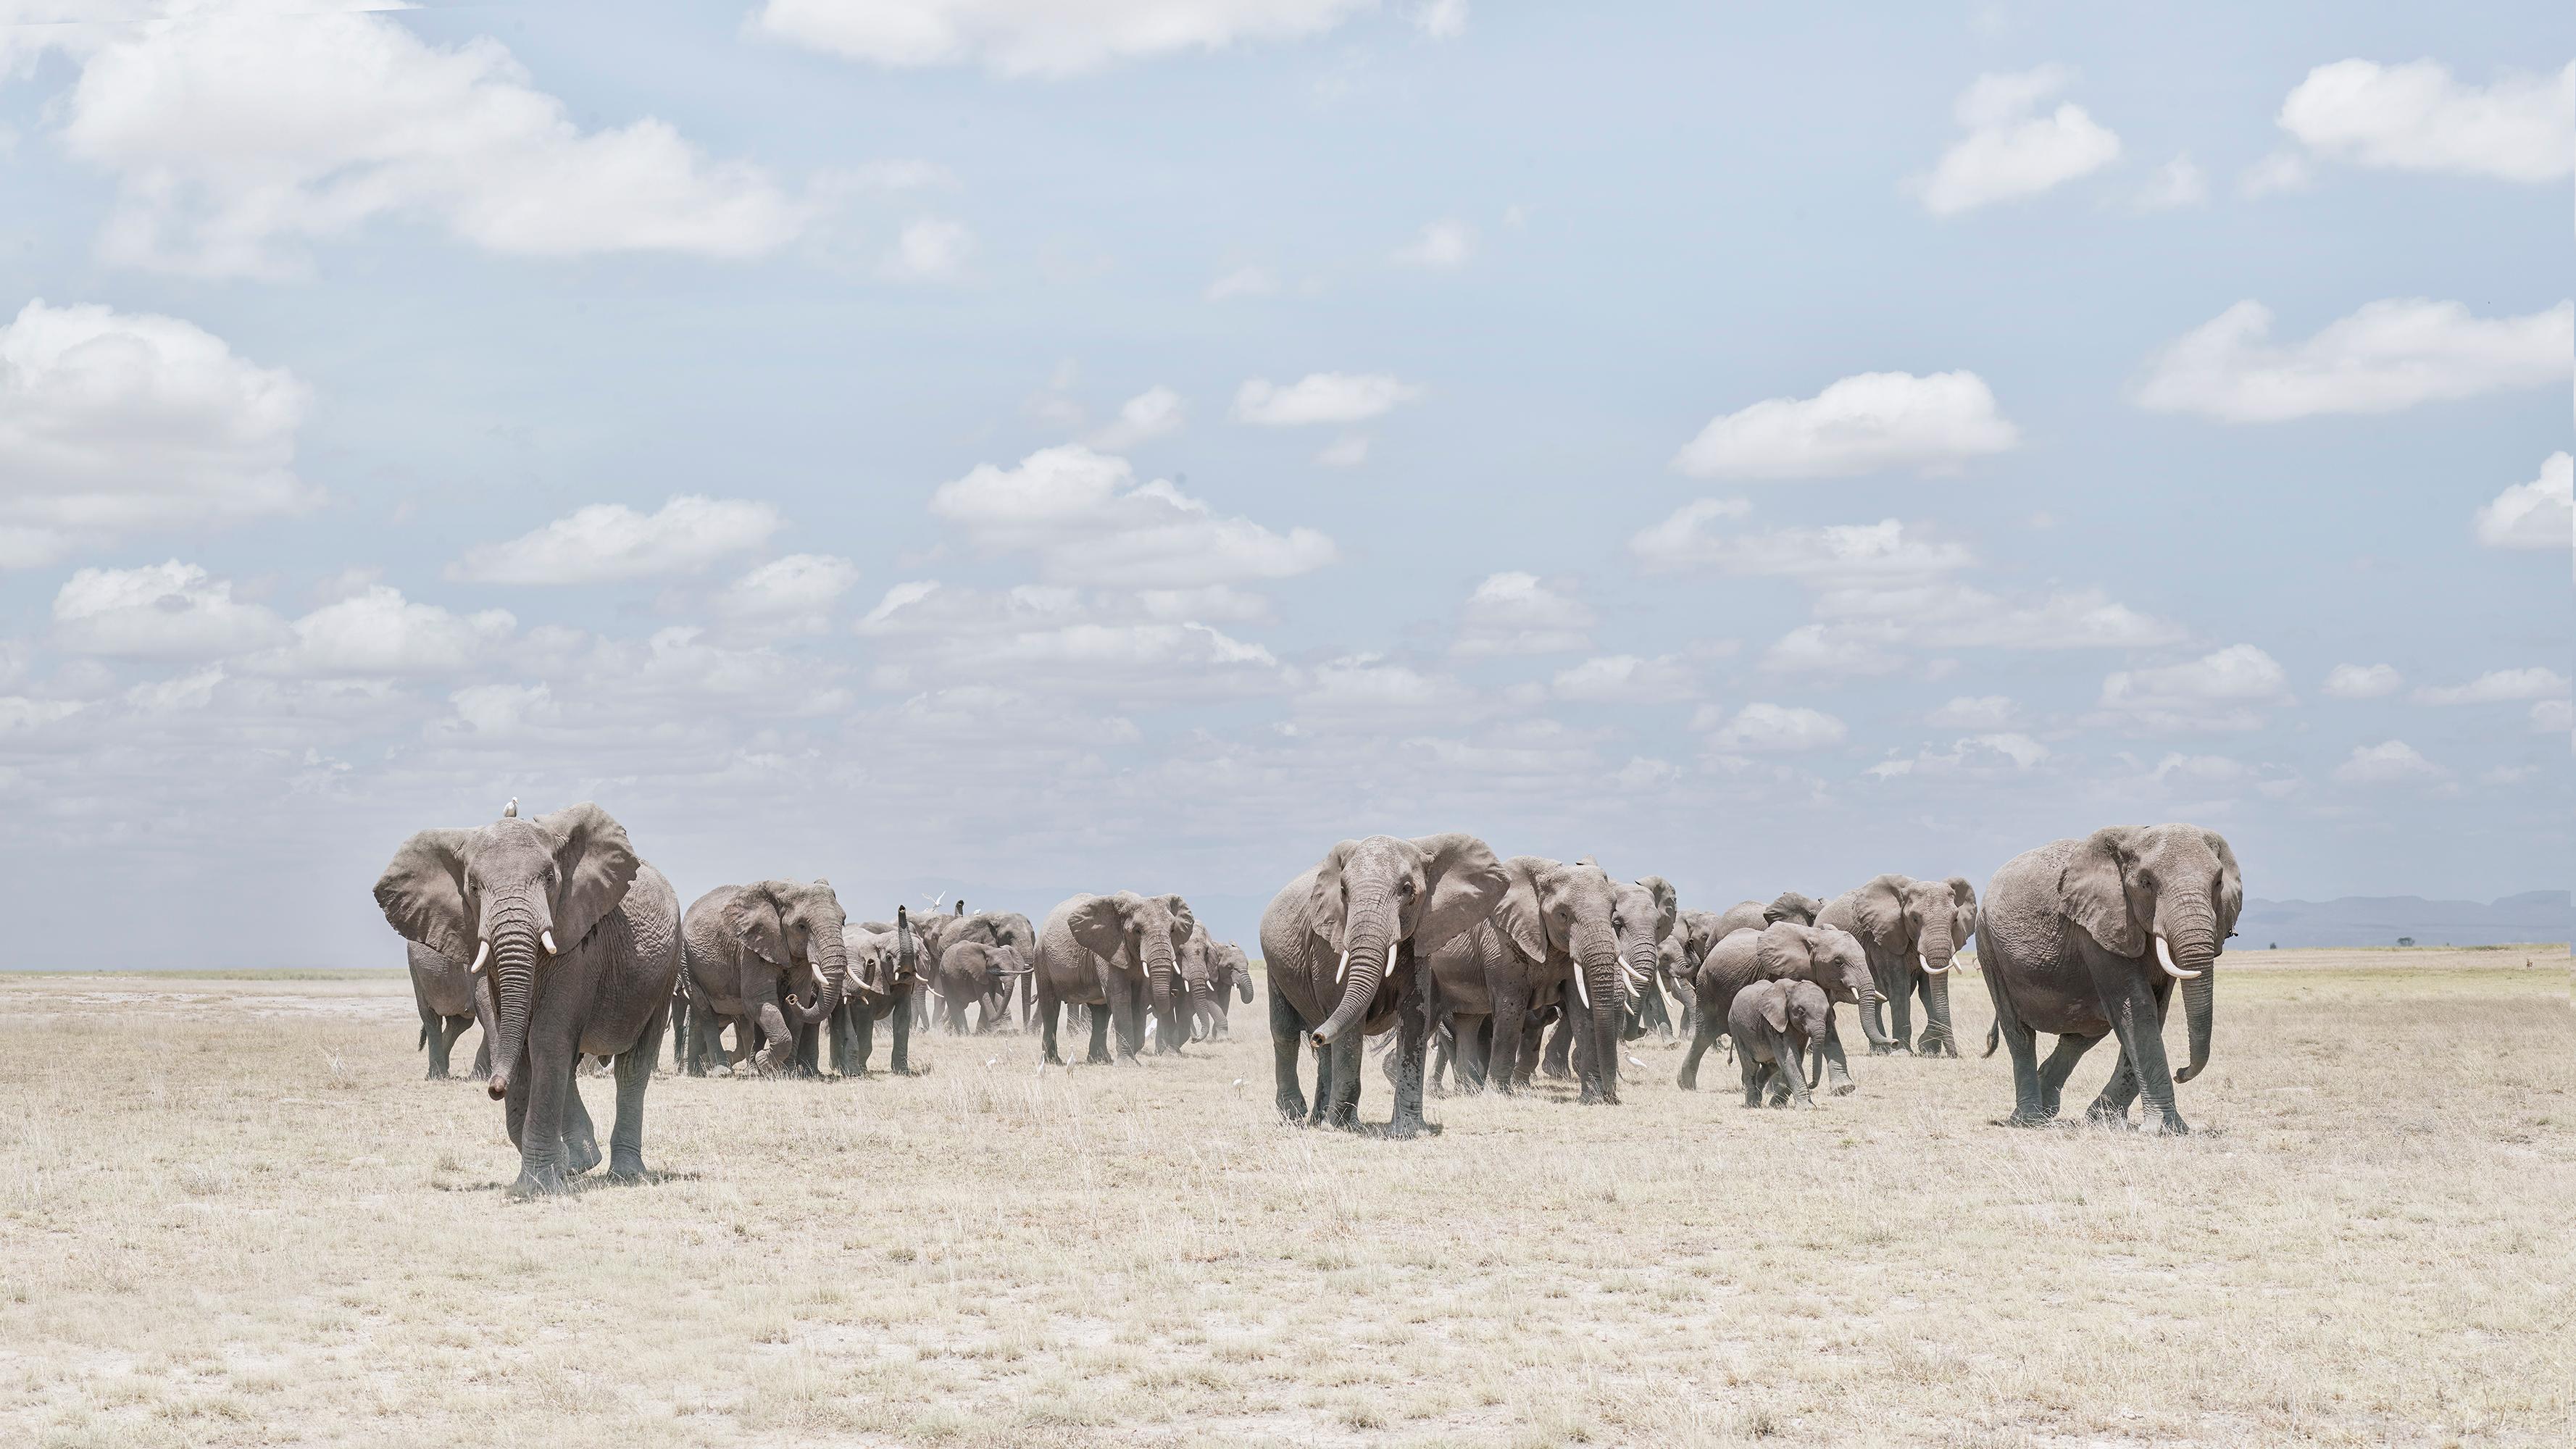 David Burdeny - Elephants Crossing Dusty Plain, Amboseli, 2018, Printed After